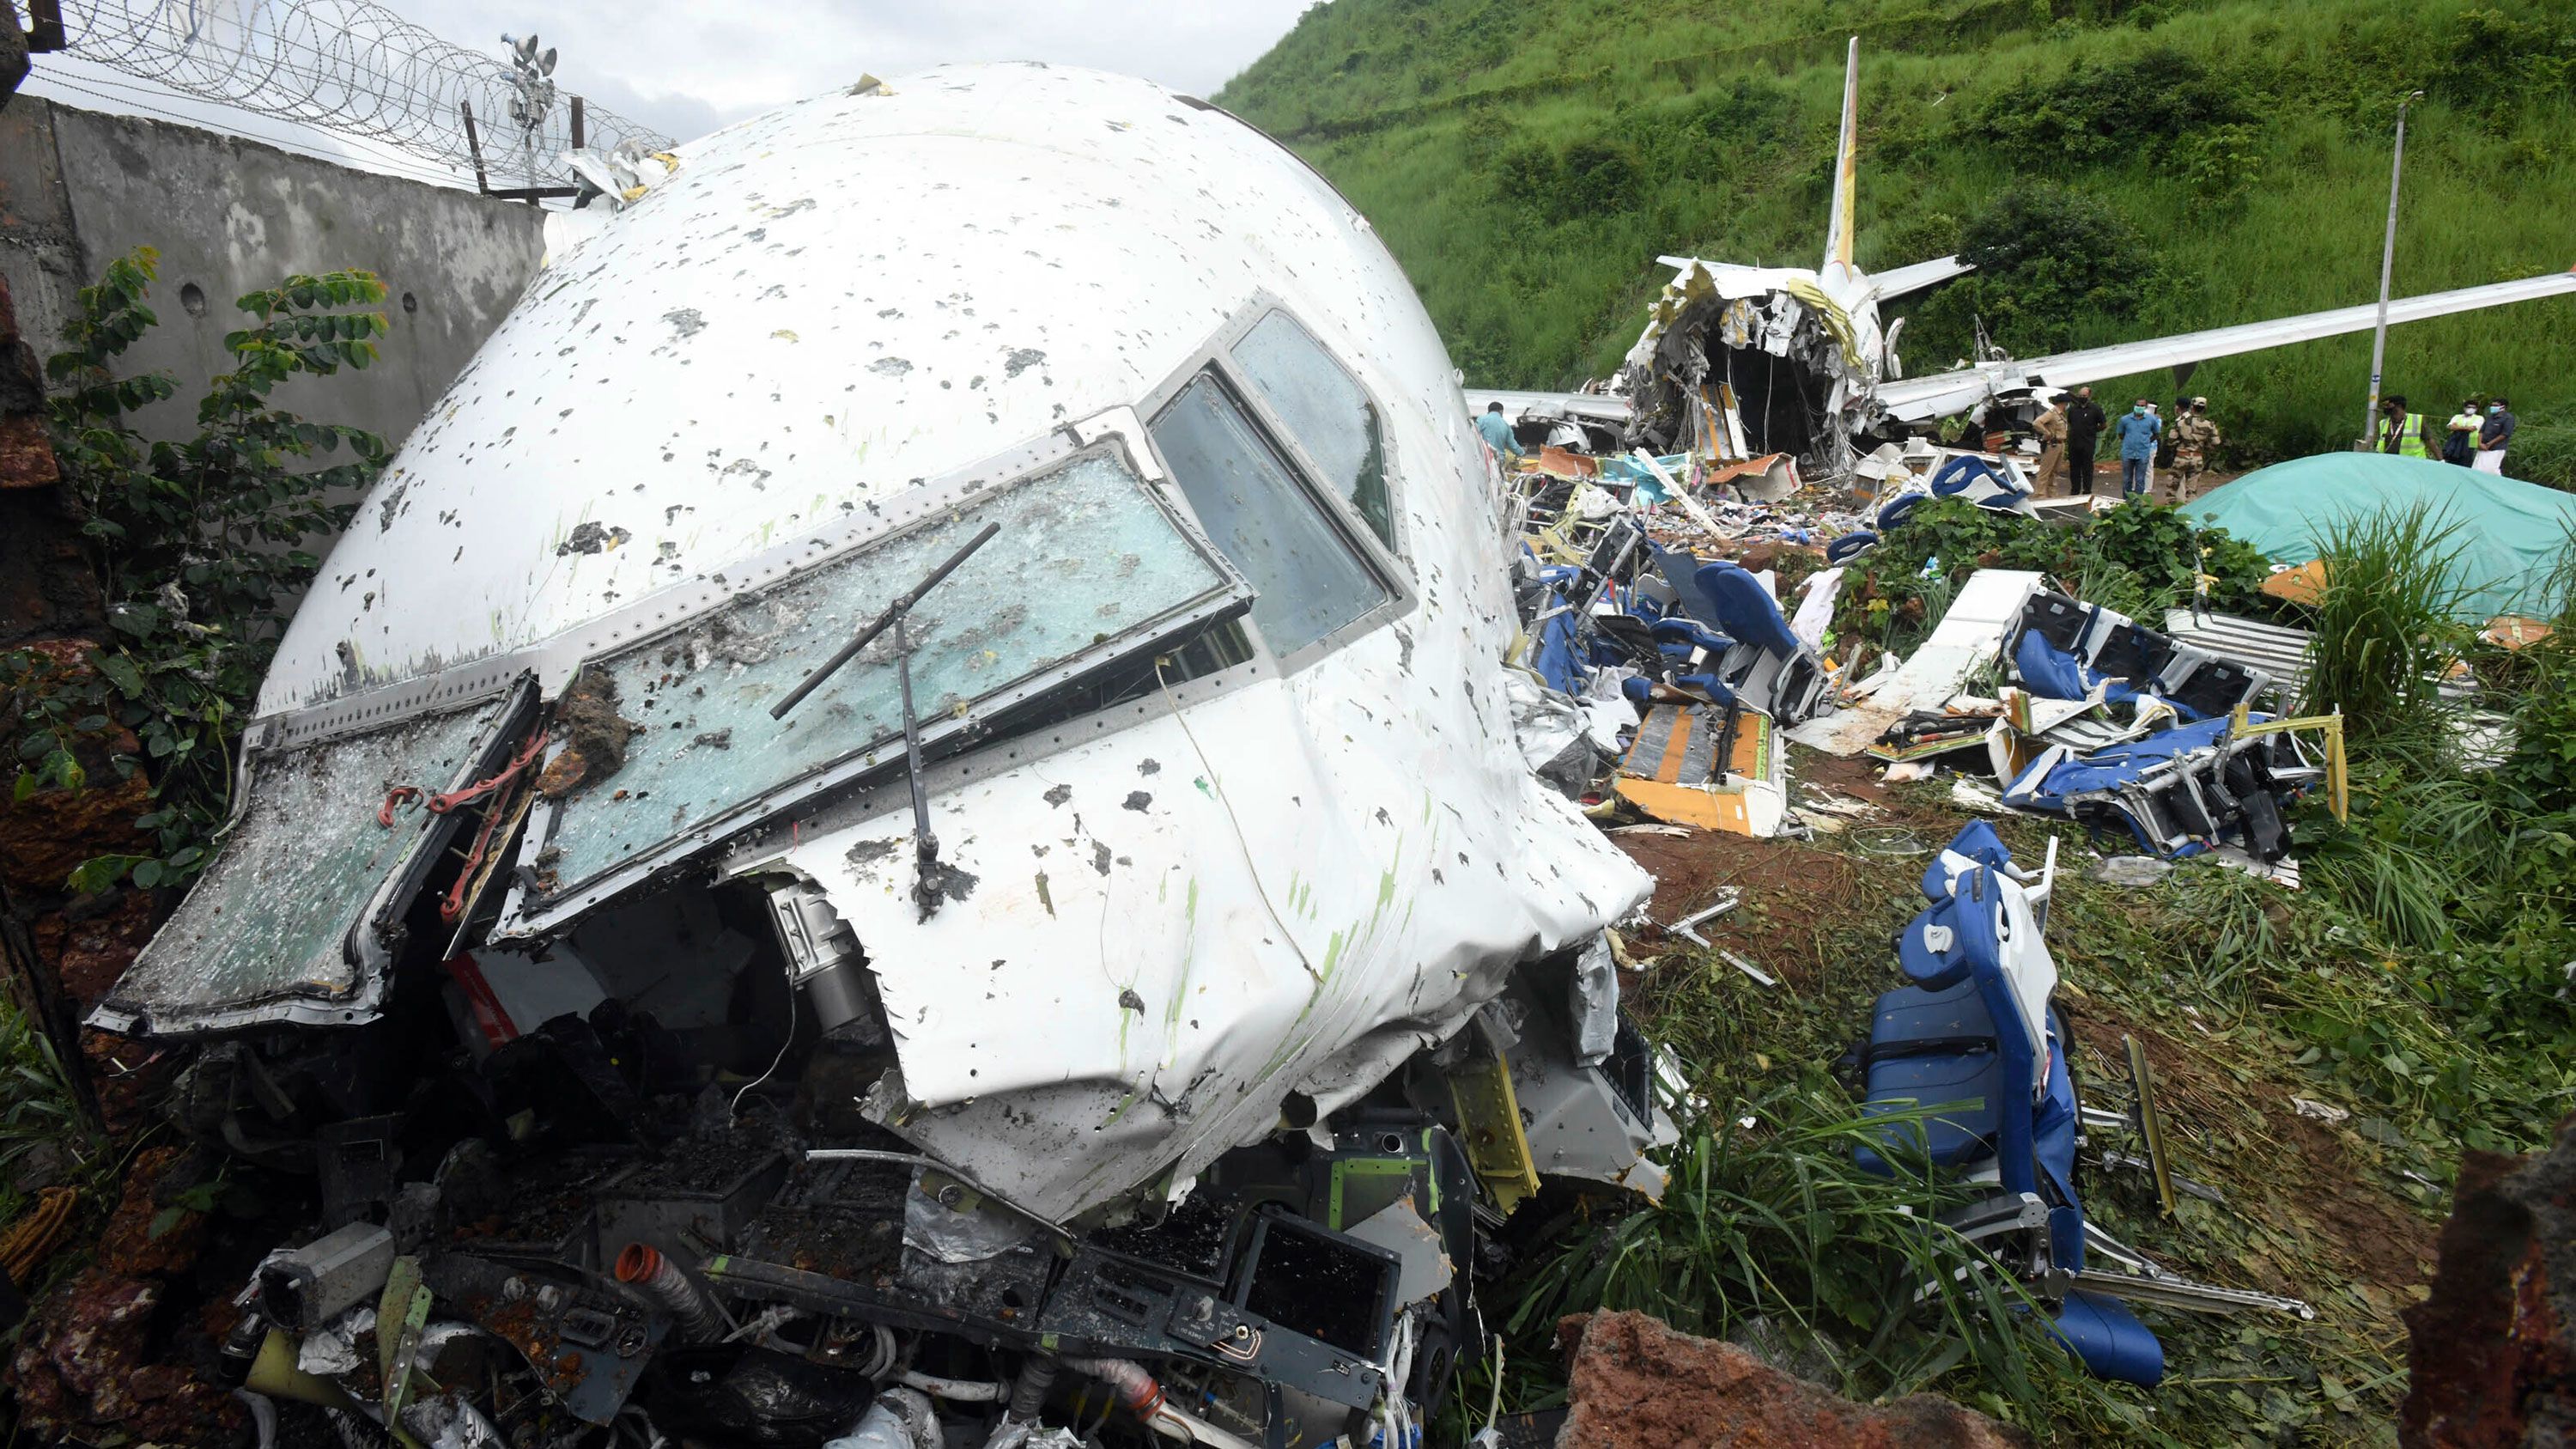 4 children identified among Air India Express plane crash casualties | CNN